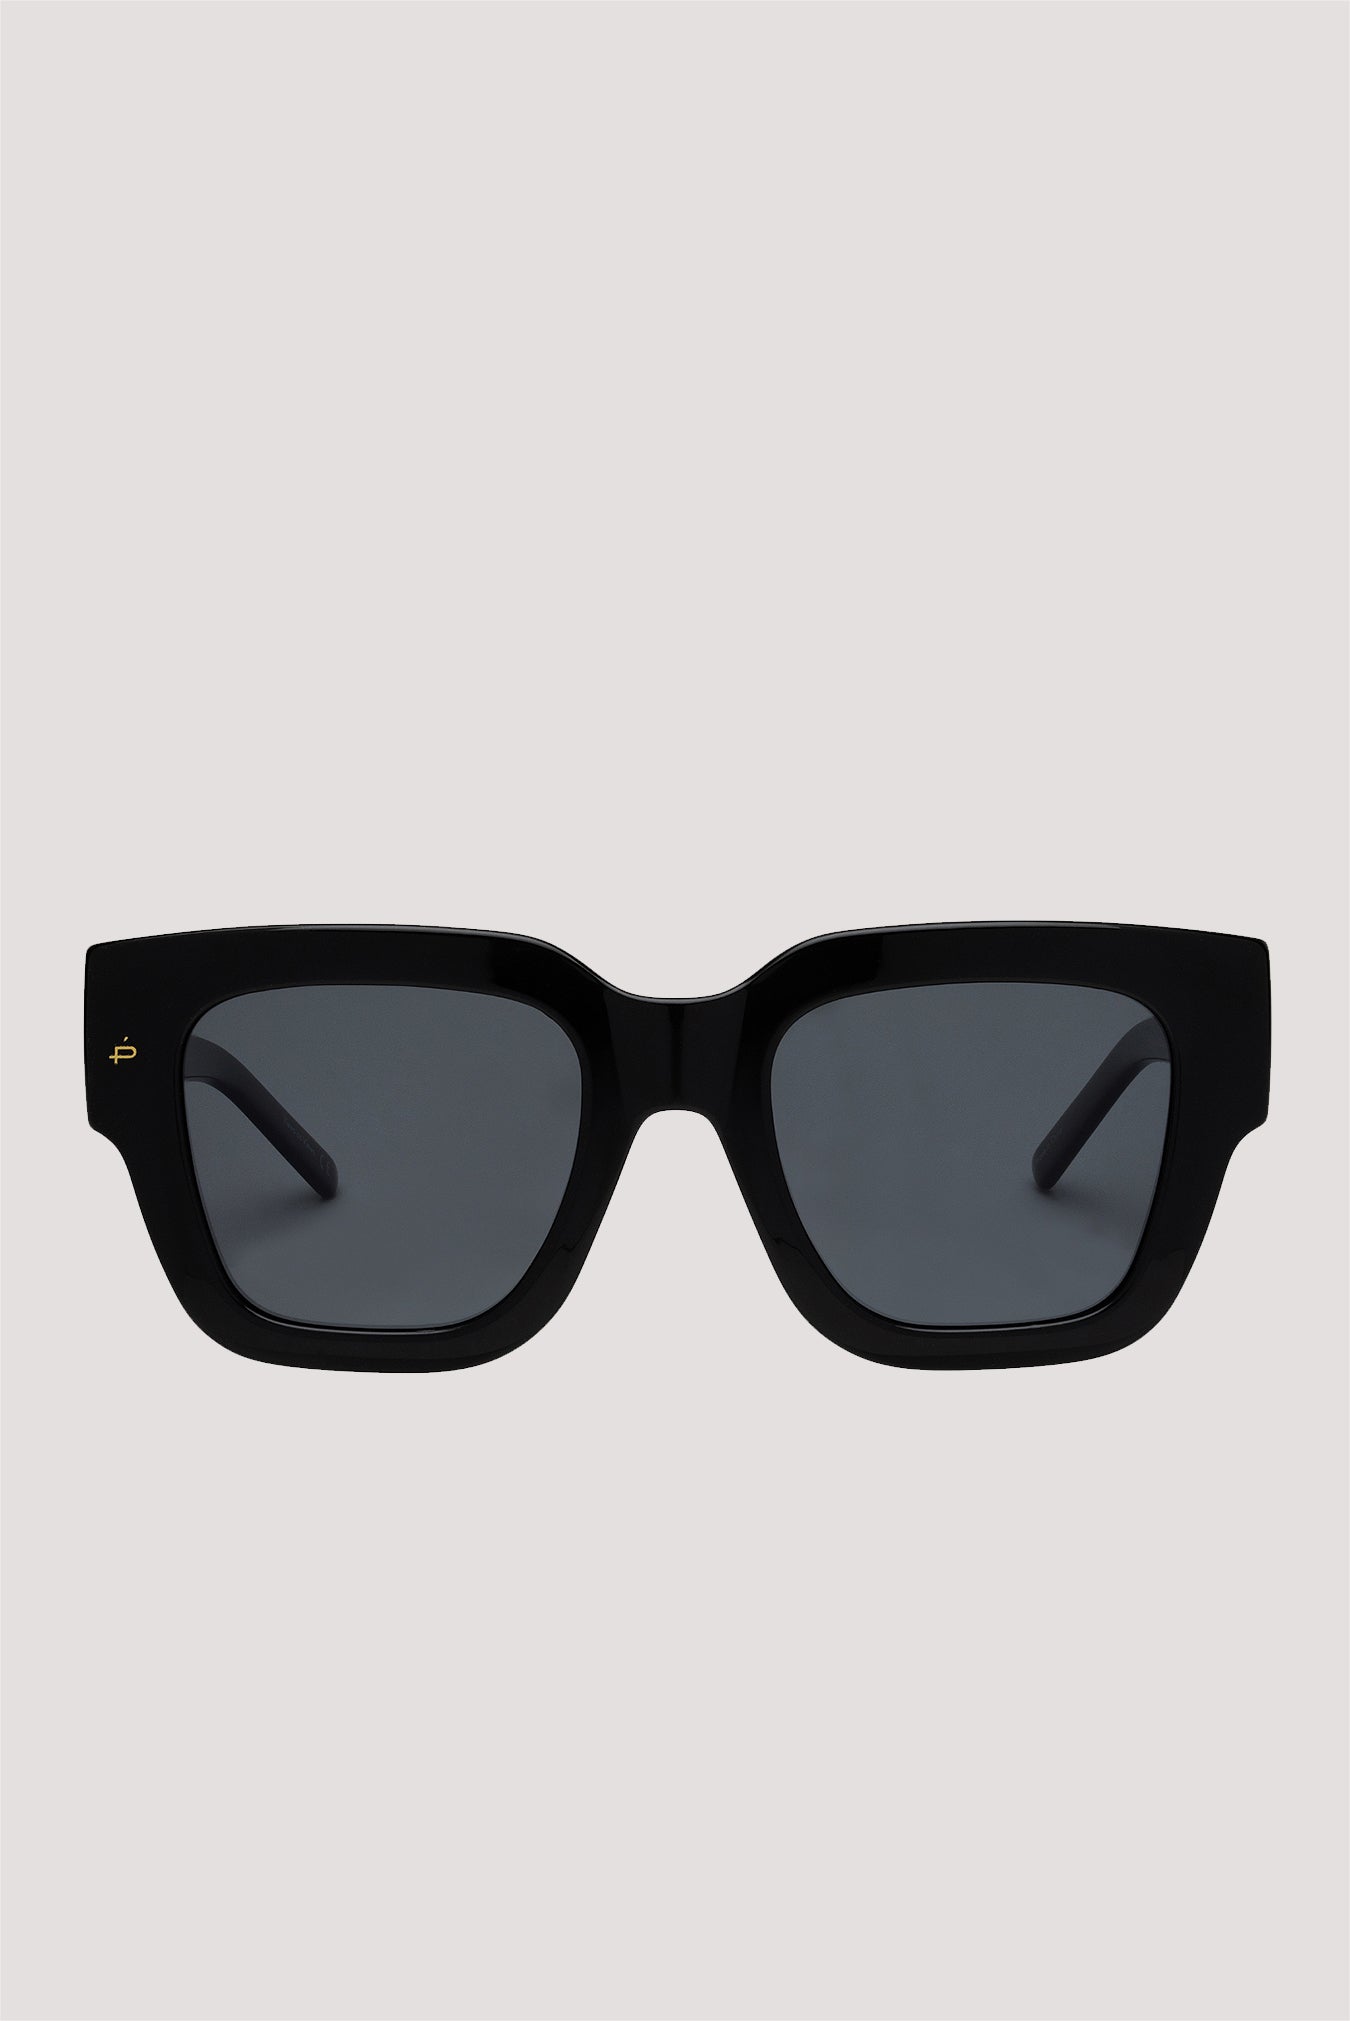 The New Yorker Sunglasses | North Beach